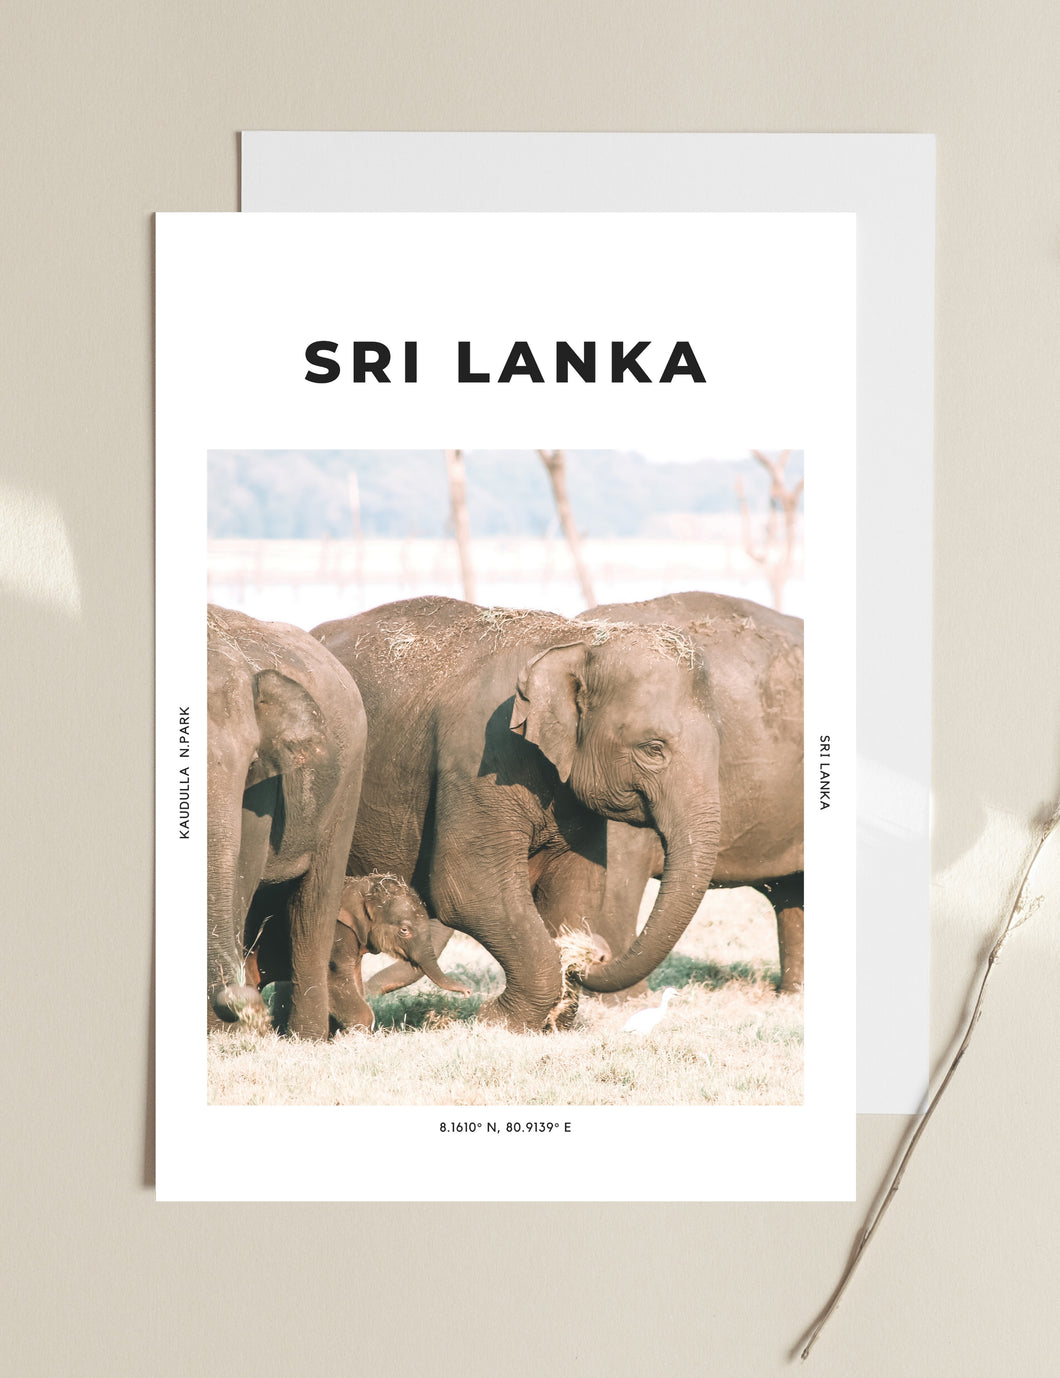 Sri Lanka 'Dream Big' Print